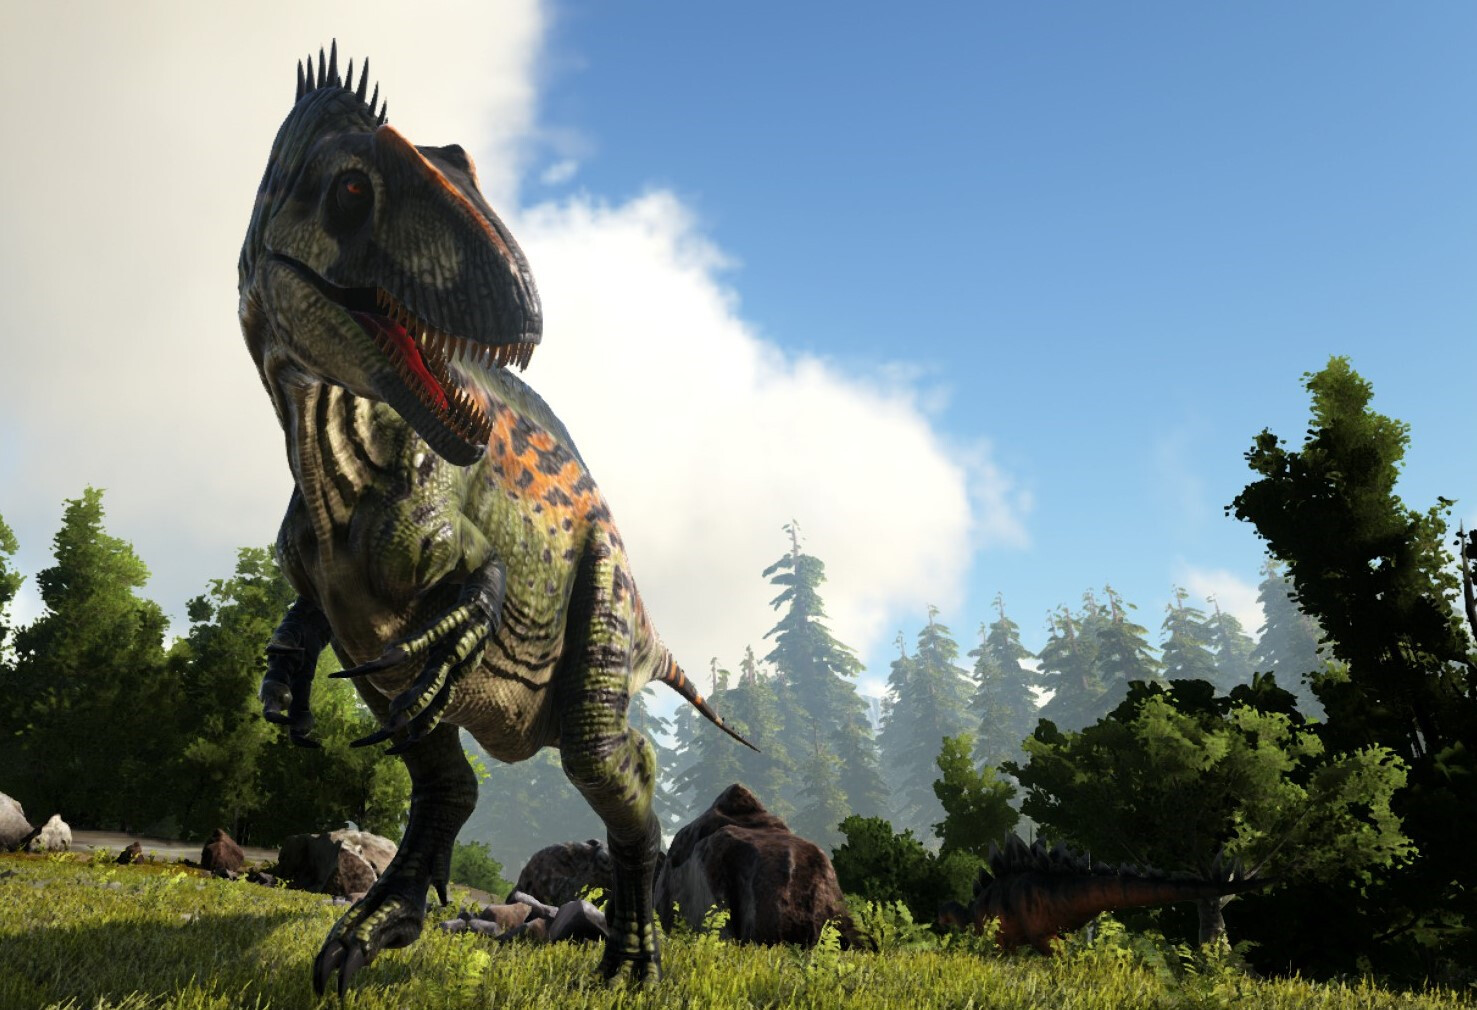 ArtStation - Deinosuchus: Ark Additions Mod